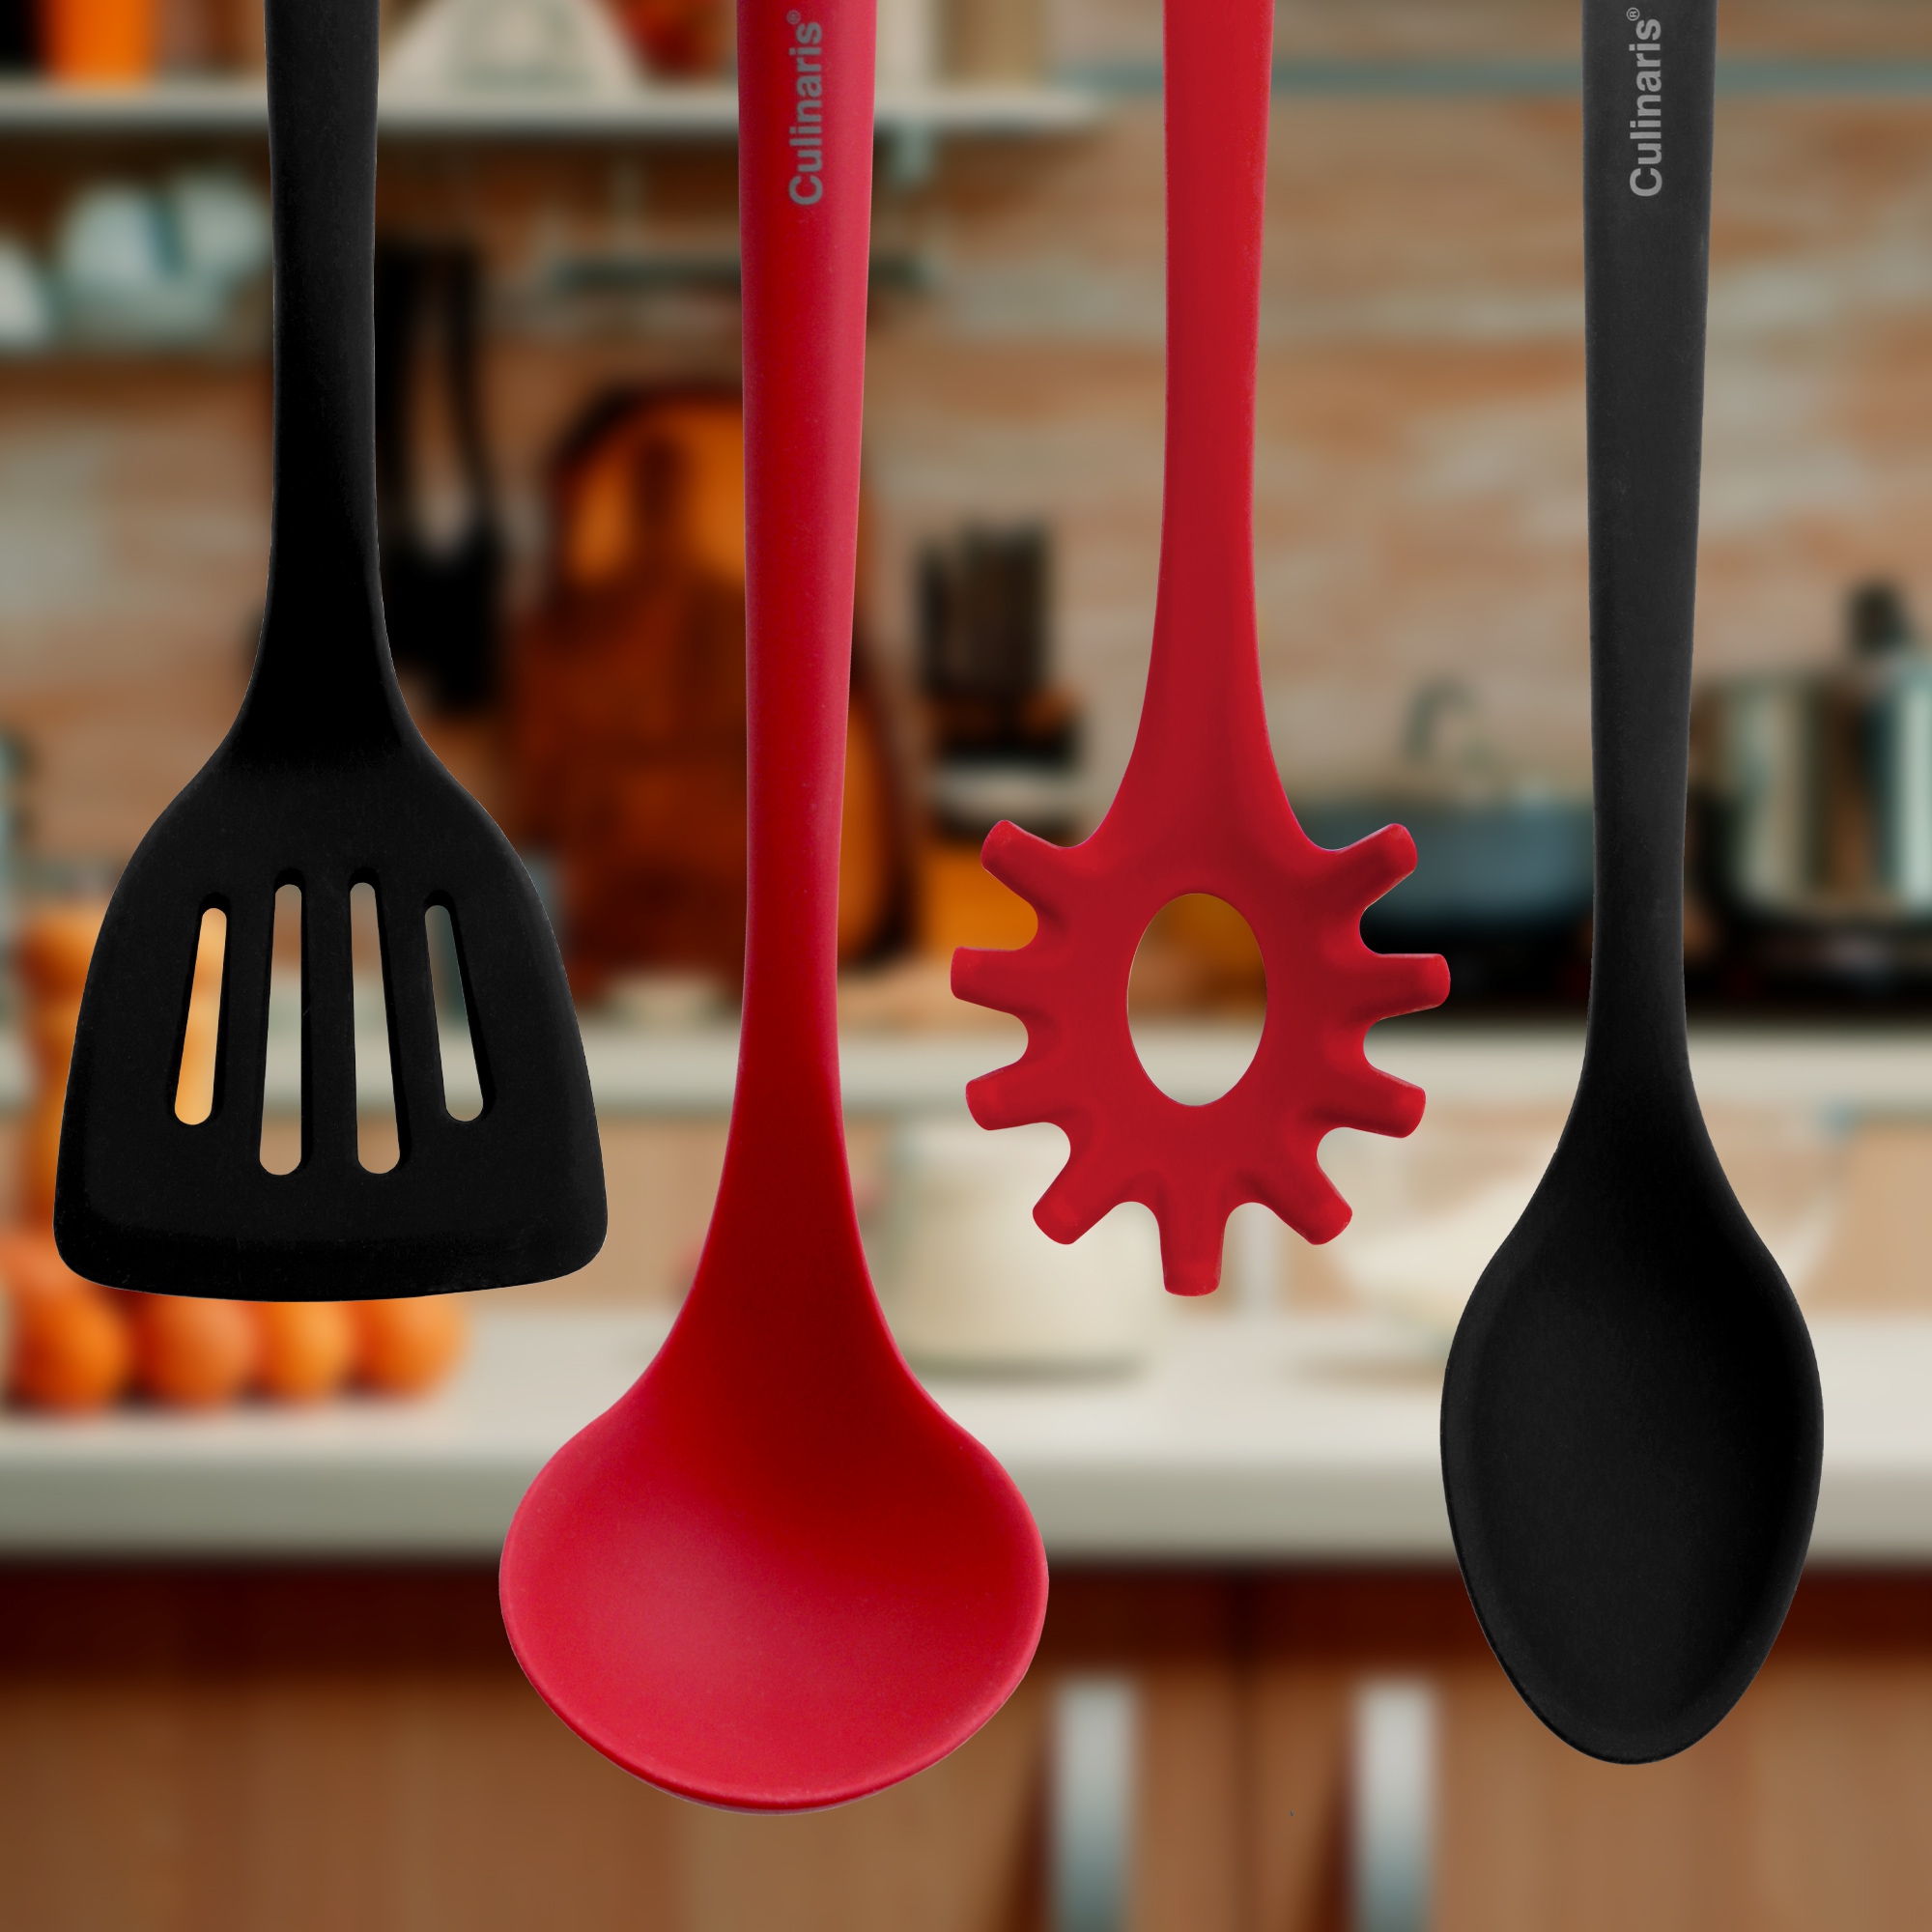 Culinaris Silicone tools - Perforated turner